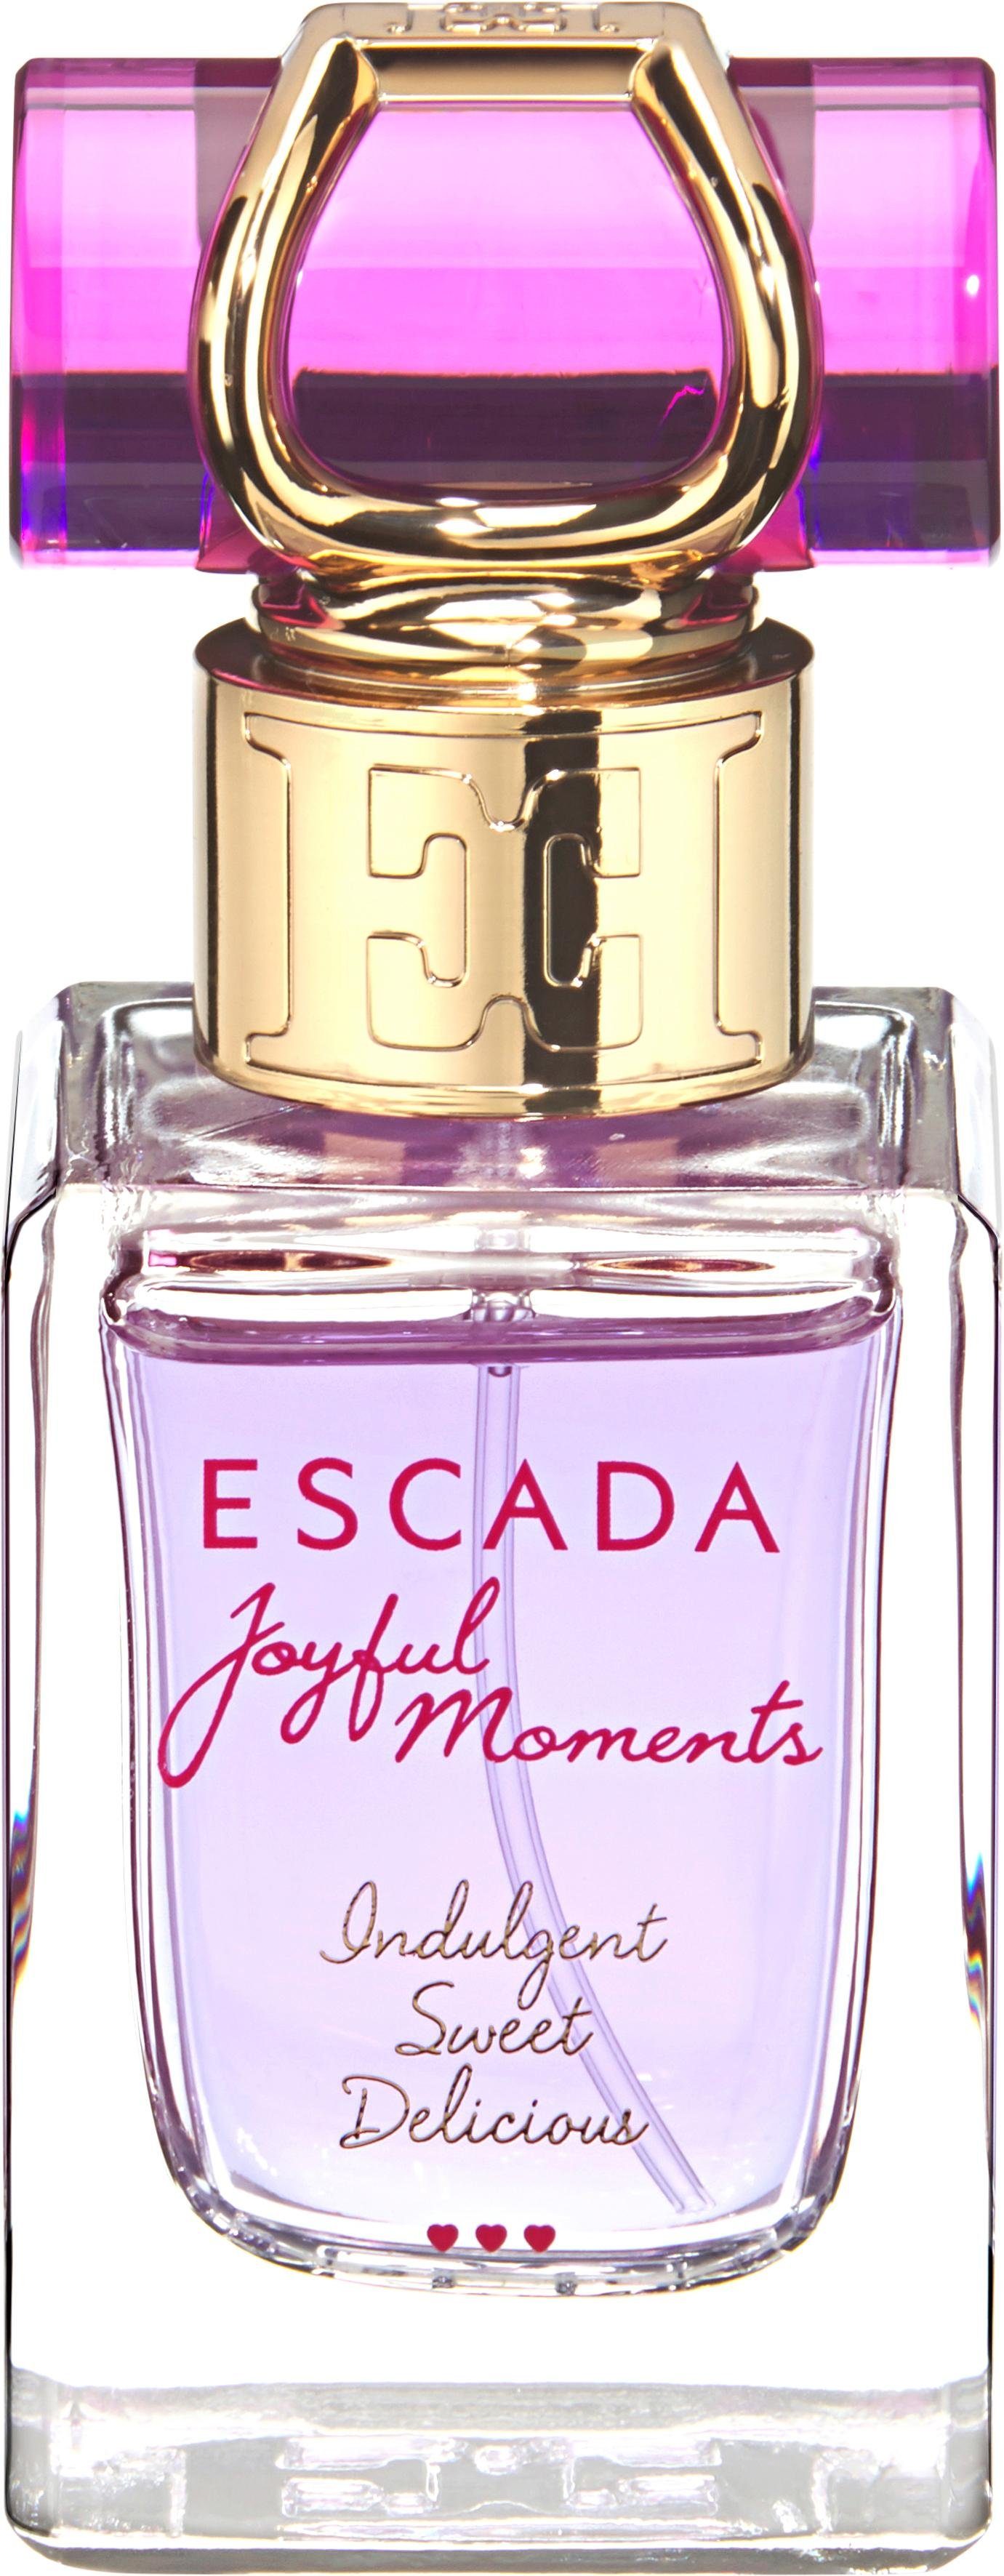 Joyful Eau Parfum de ESCADA Moments